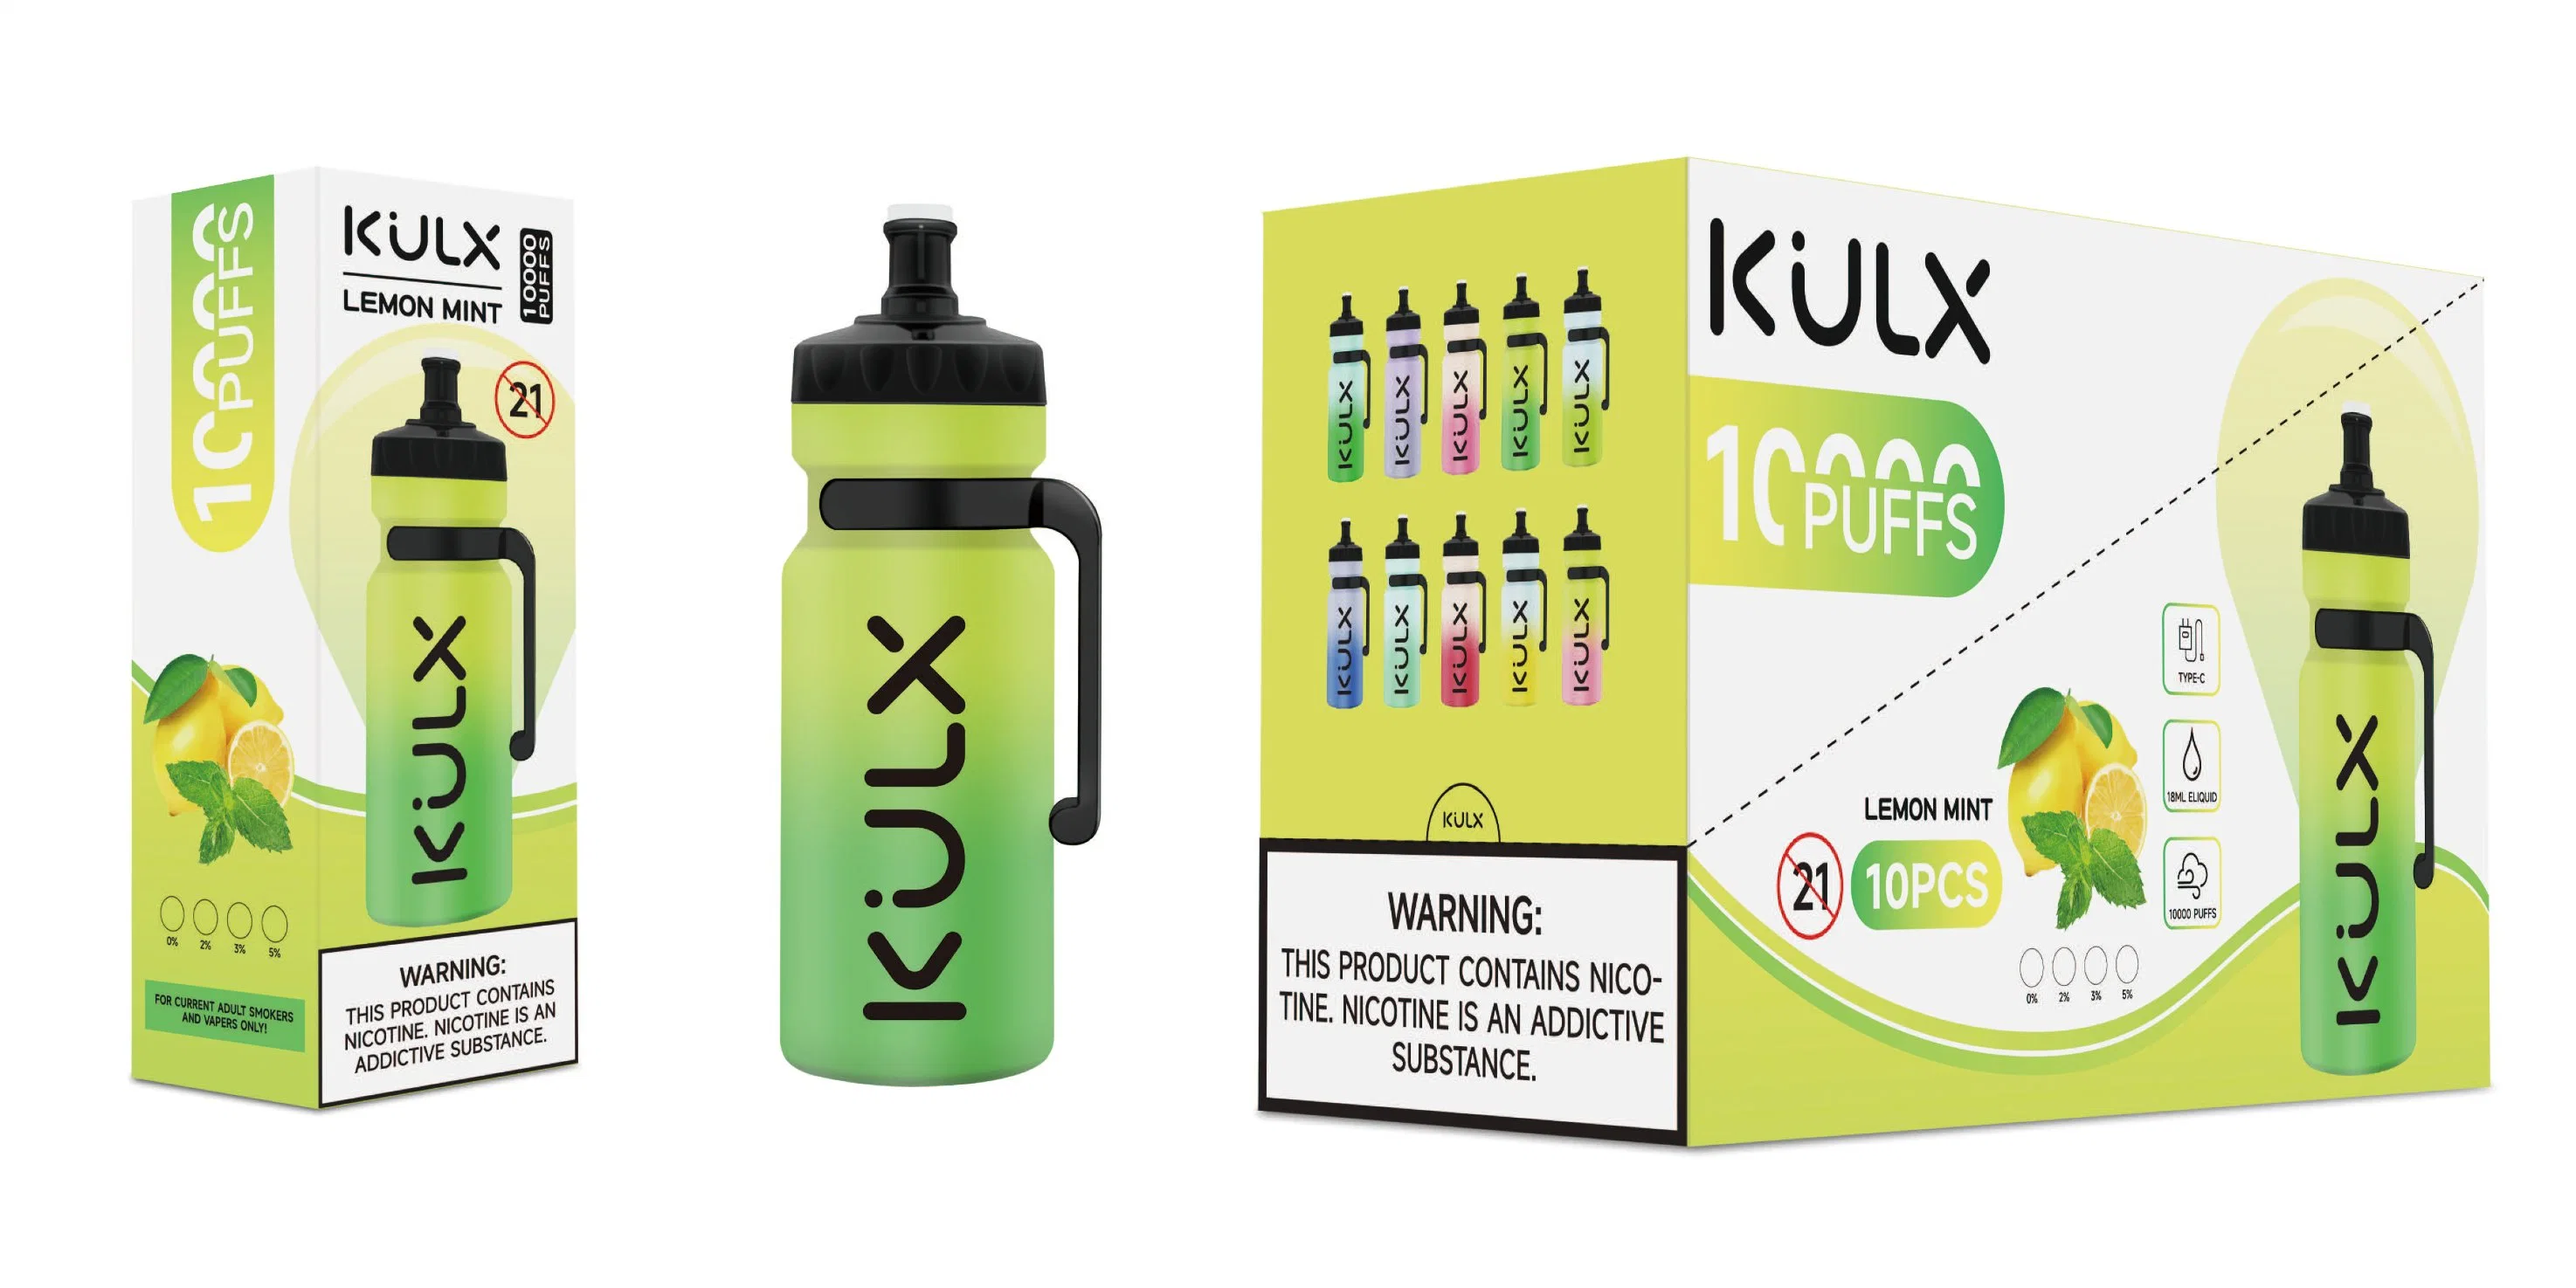 Kulx الجملة المقبلات 10000 ماسات E السجائر قلم القرود مع تيار هواء شبكي سعر مصنع قابل للضبط